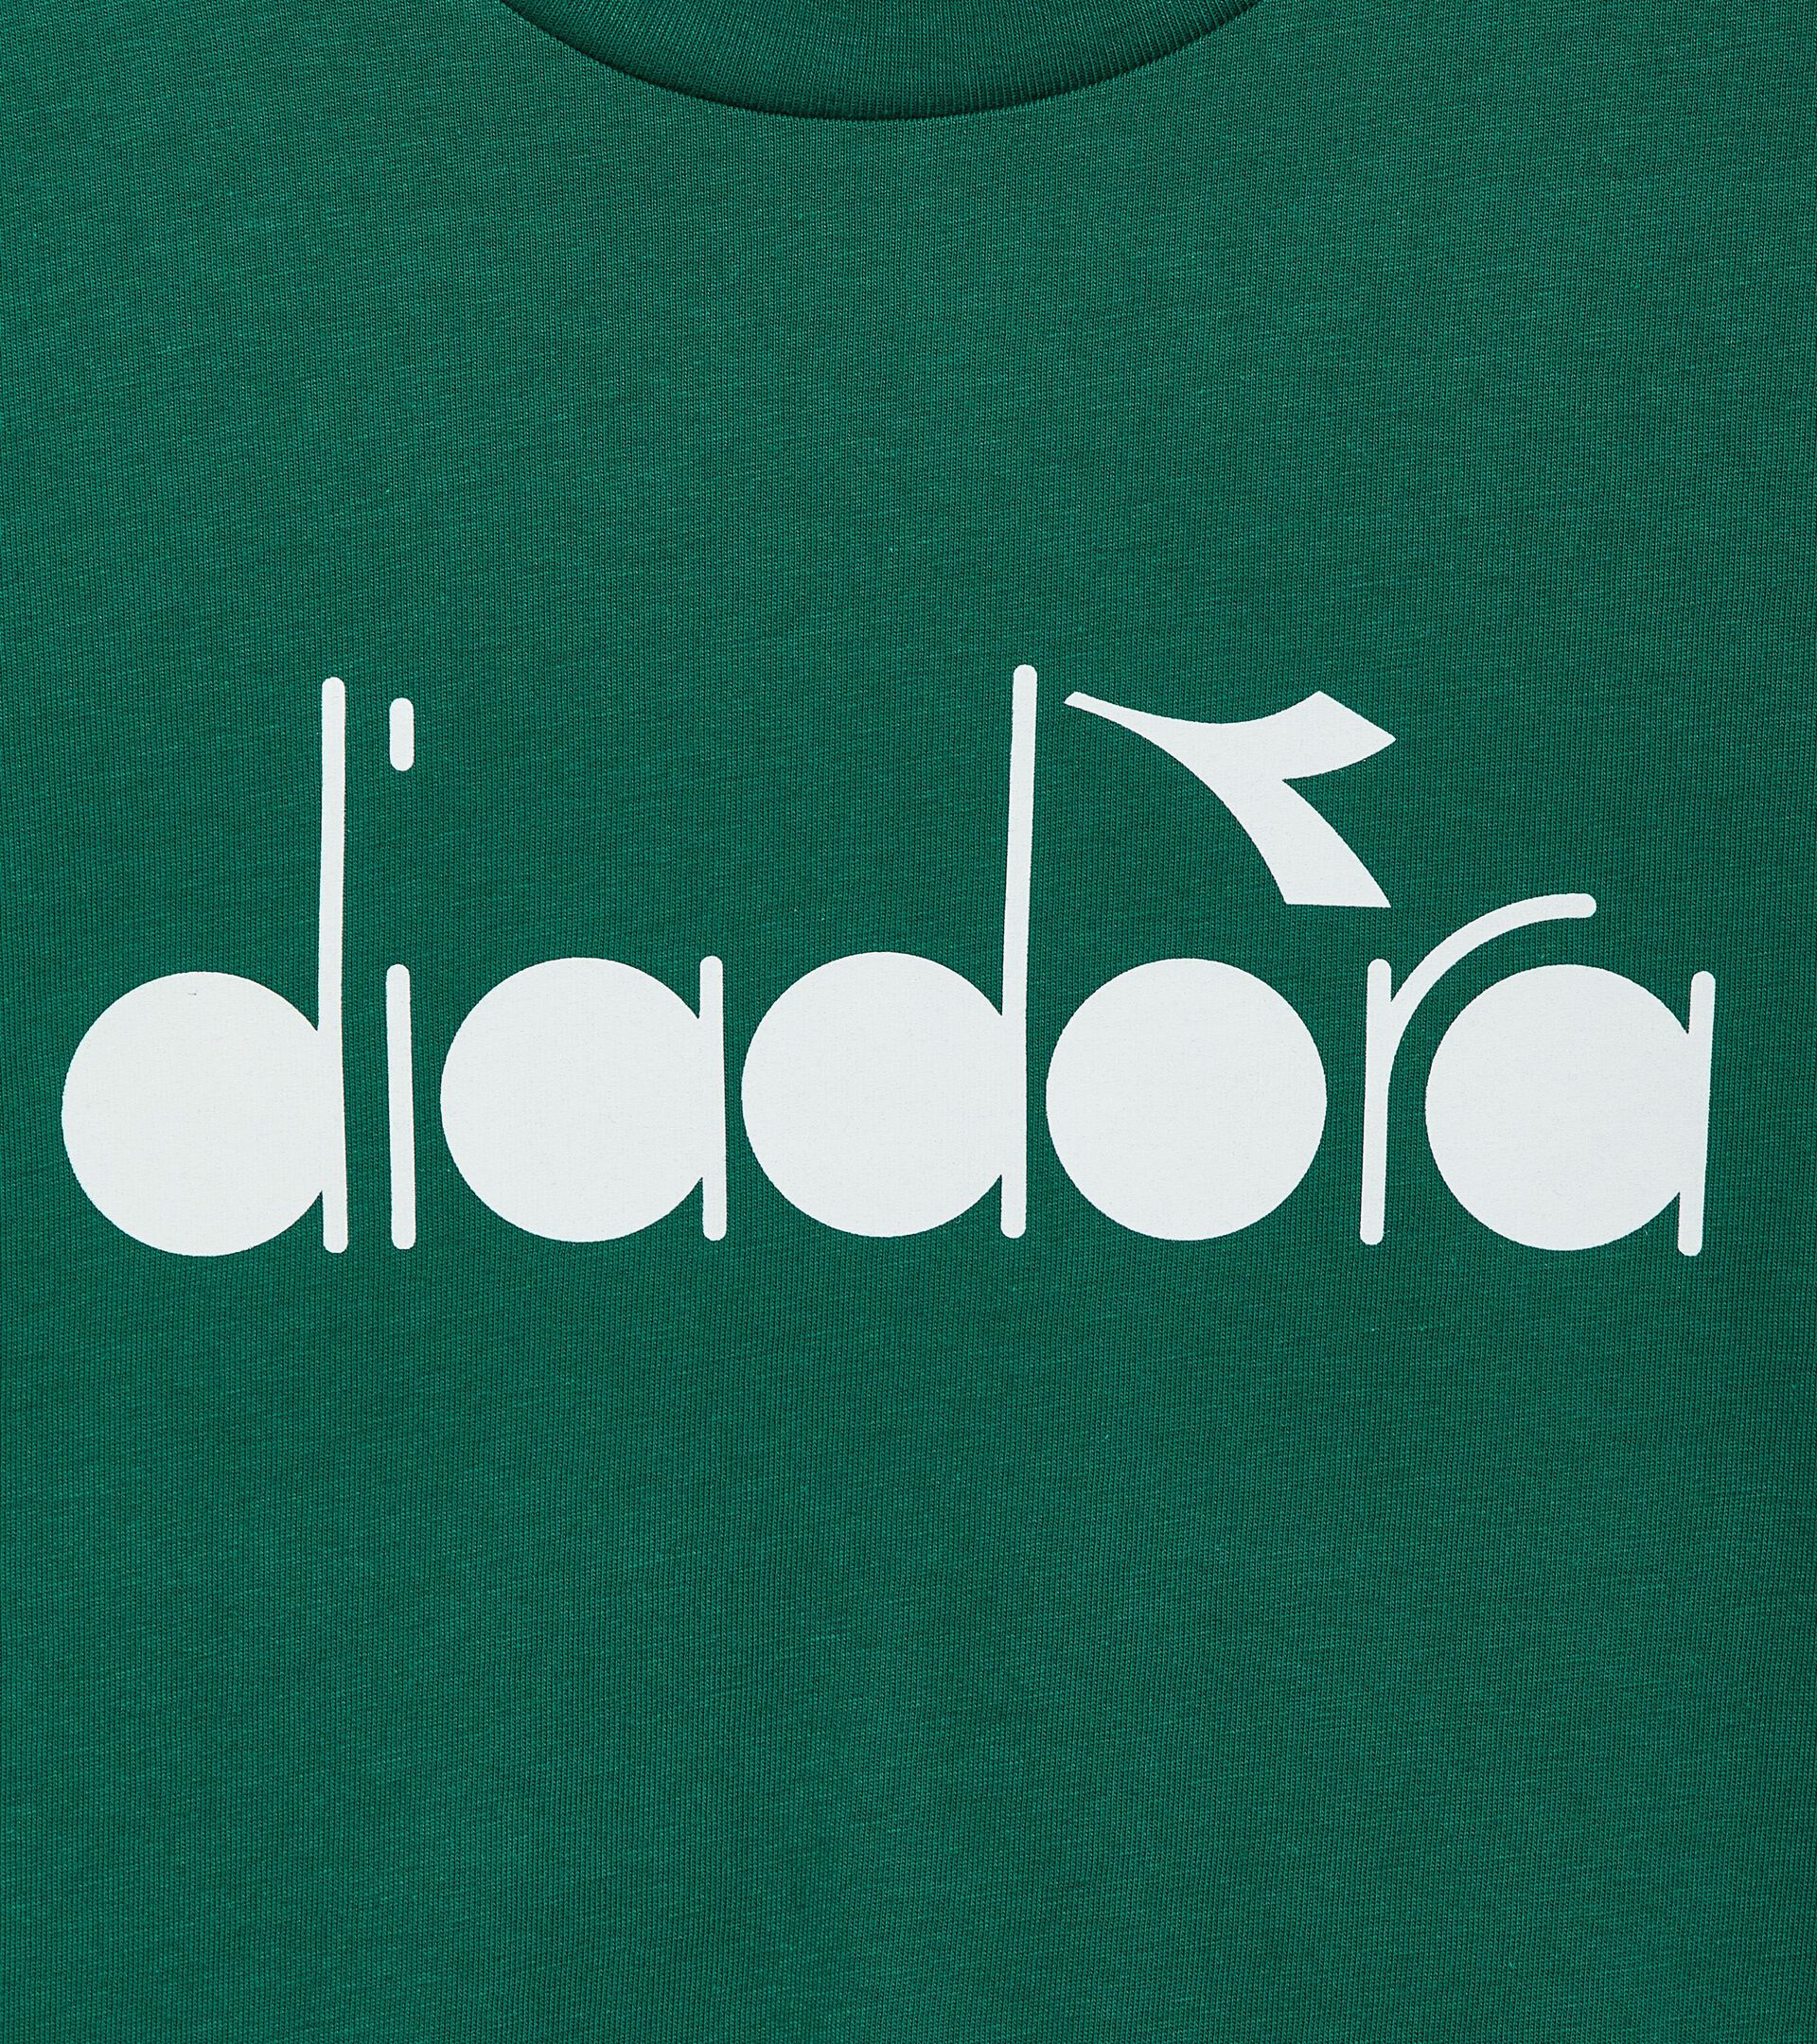 T-Shirt – Made in Italy - Gender Neutral  T-SHIRT SS LOGO AVENTURIN - Diadora